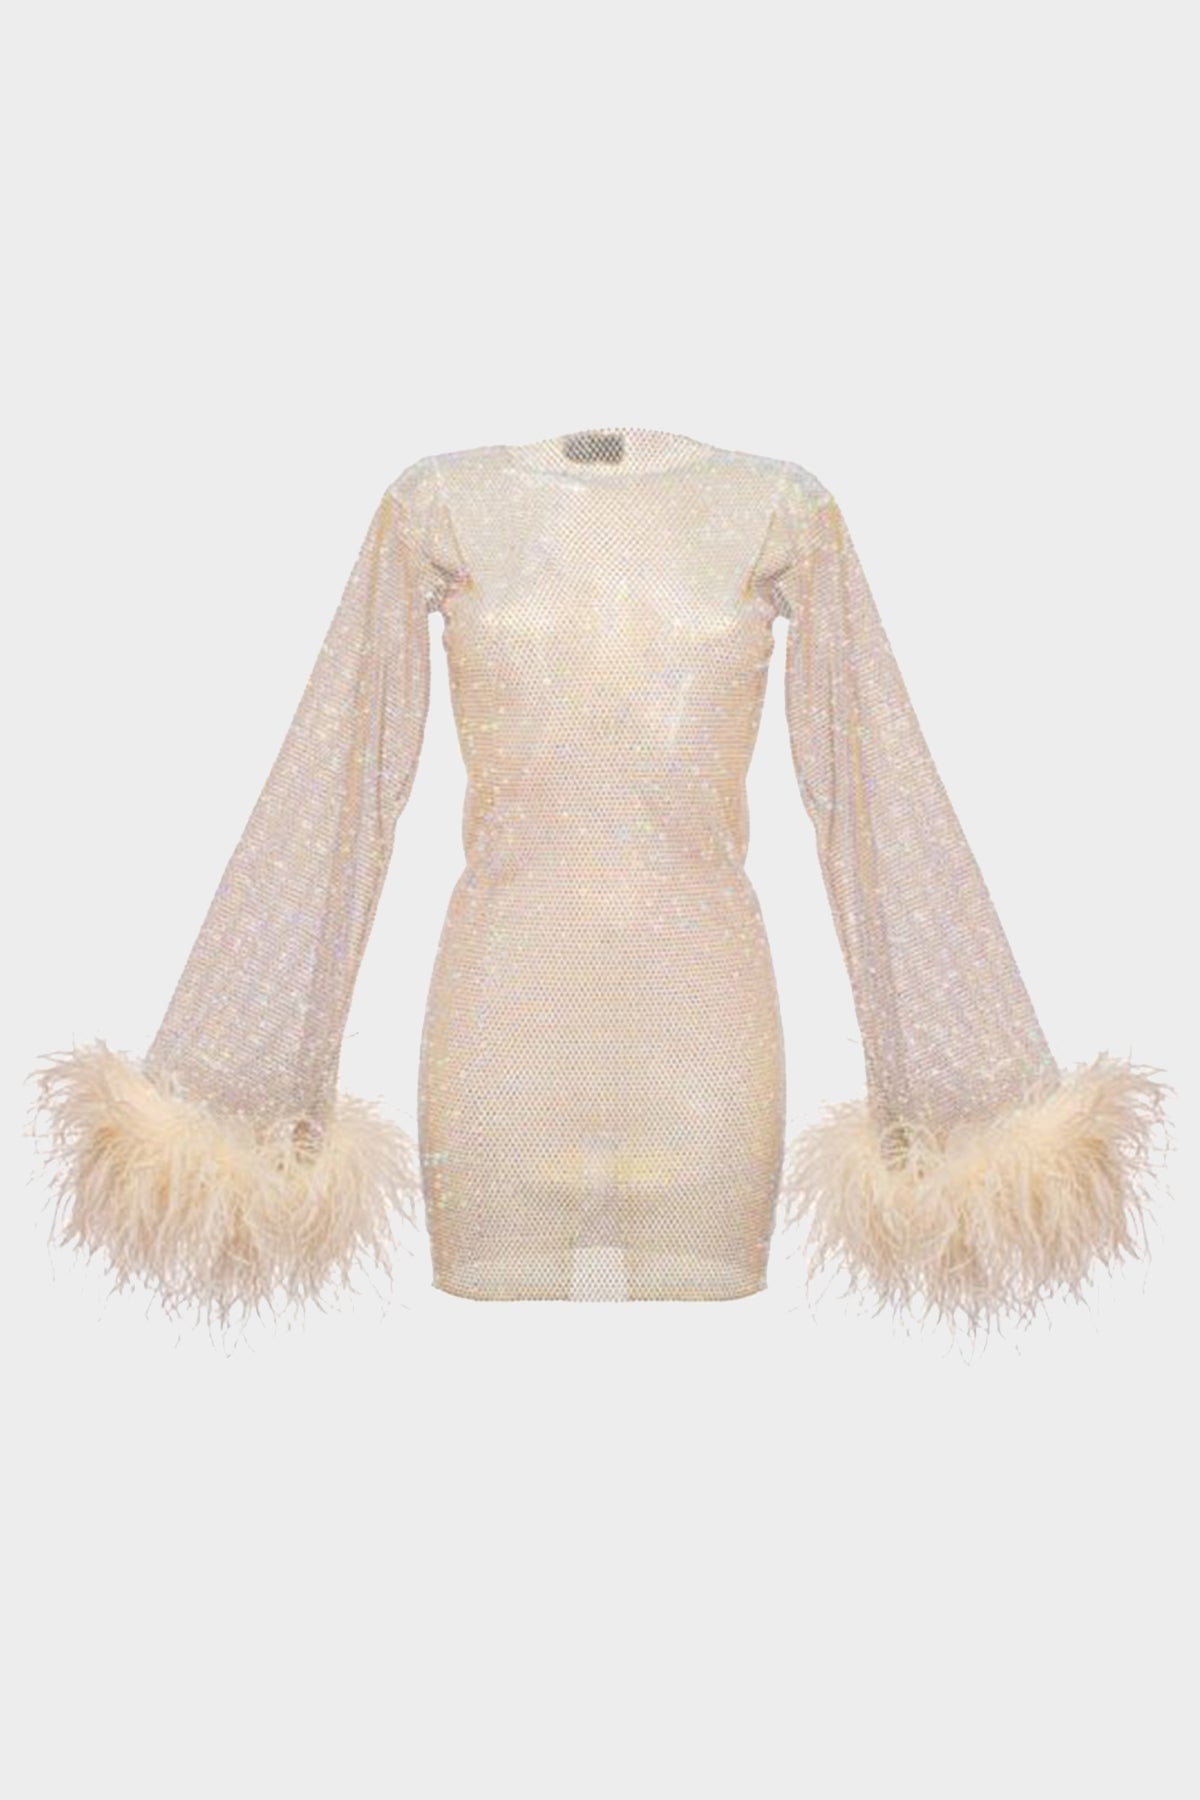 Blush Feathers Mini Dress - shop-olivia.com